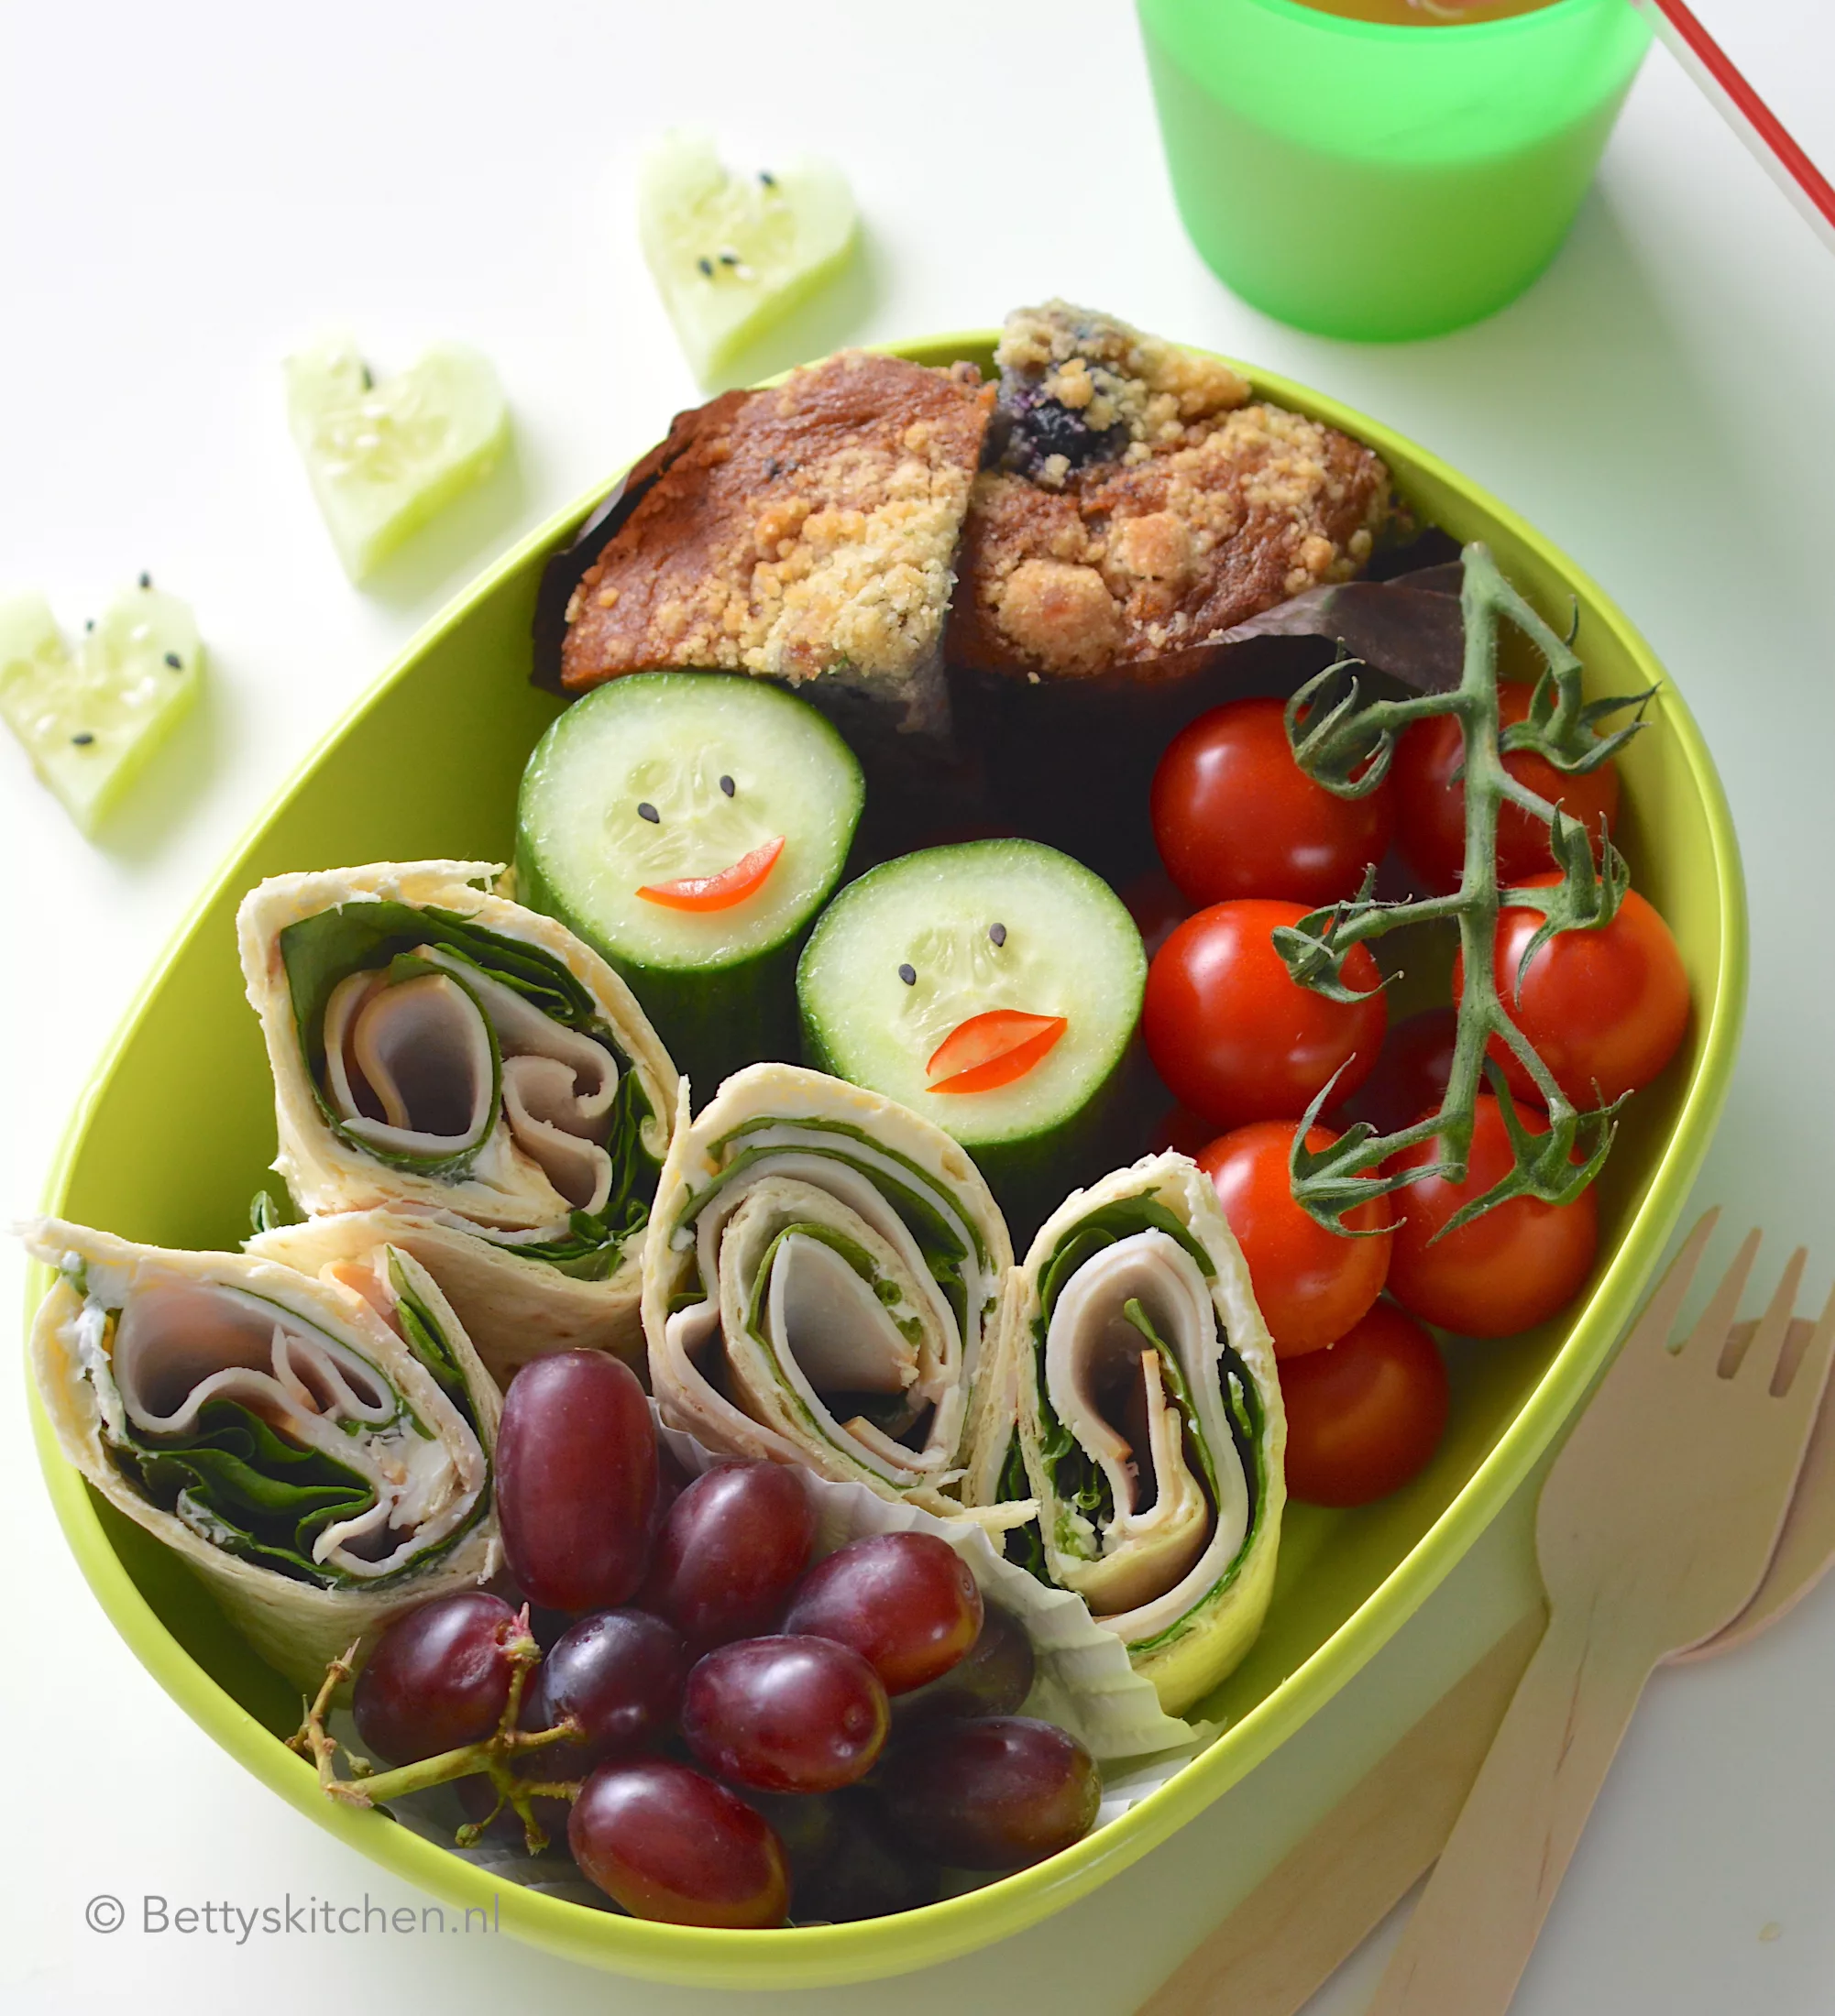 Prestatie Vochtig vrouw 5x Bento Box recepten | gezonde lunch inspiratie | Betty's Kitchen